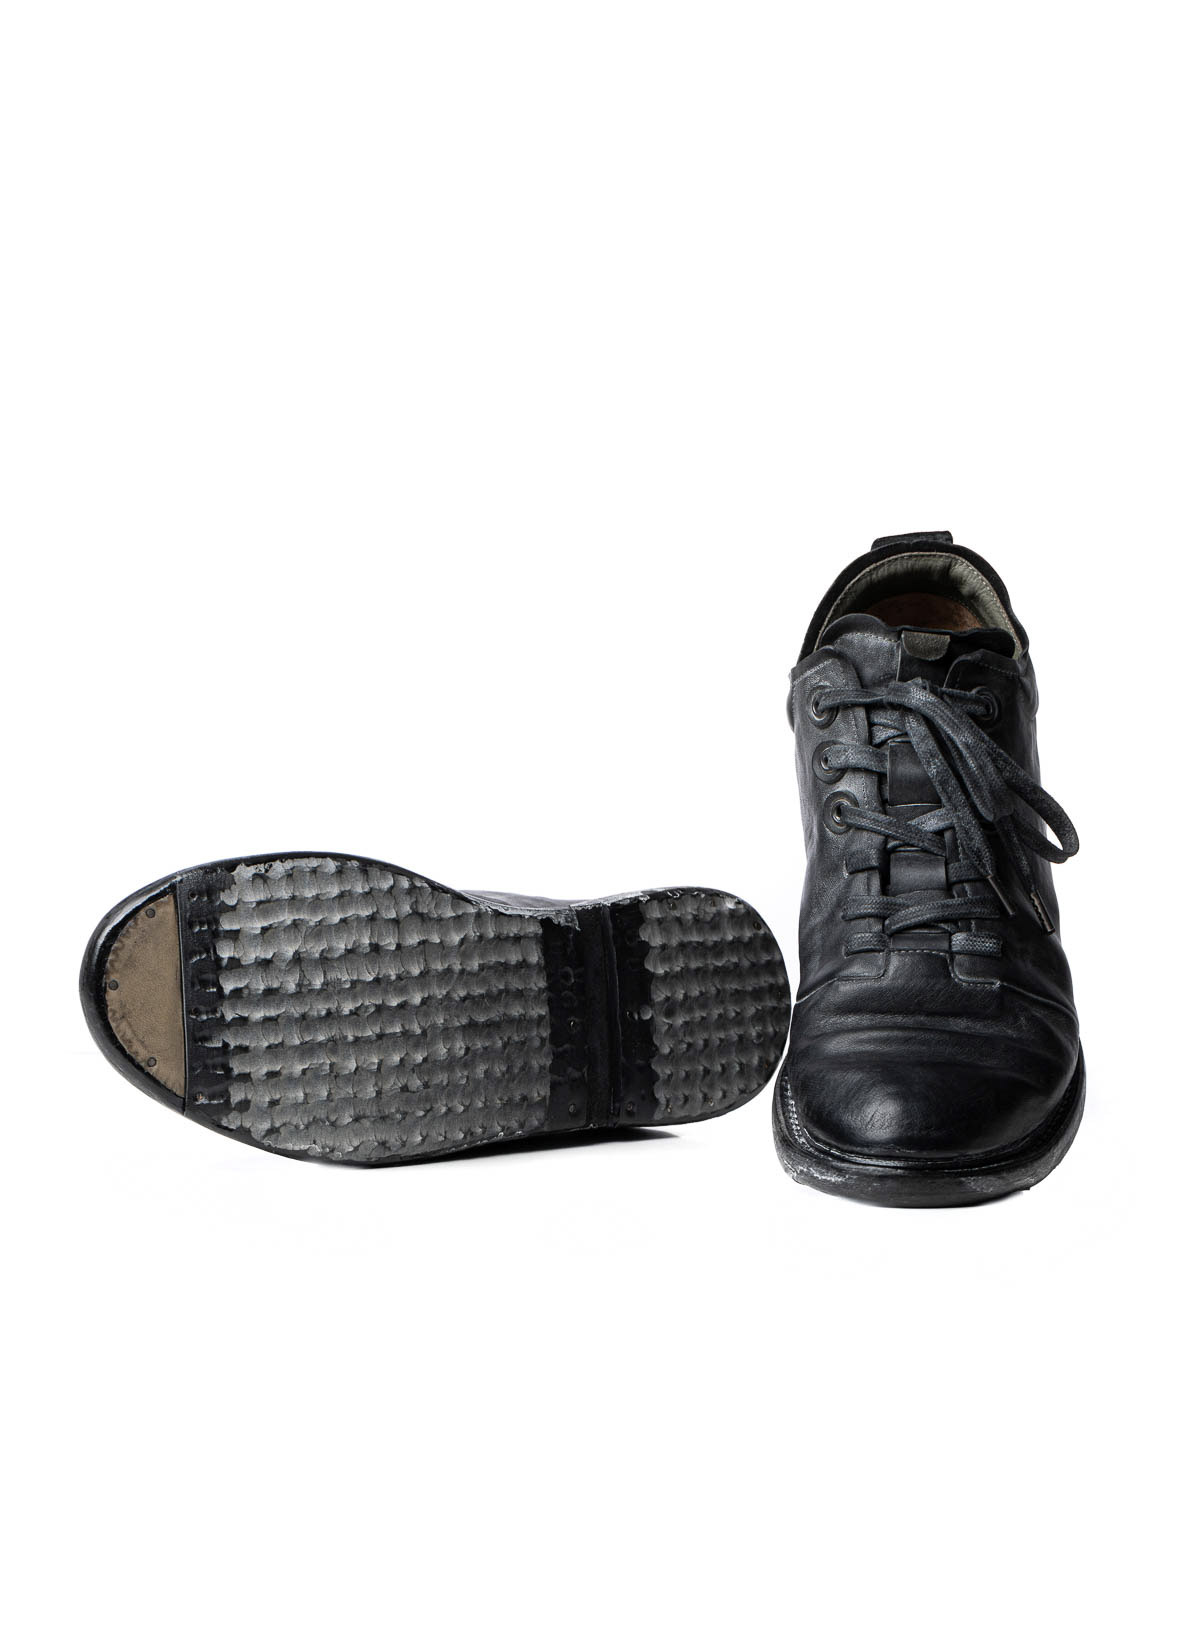 hide-m | LAYER-0 Men Sneaker Shoe 0.5 h8, black horse leather